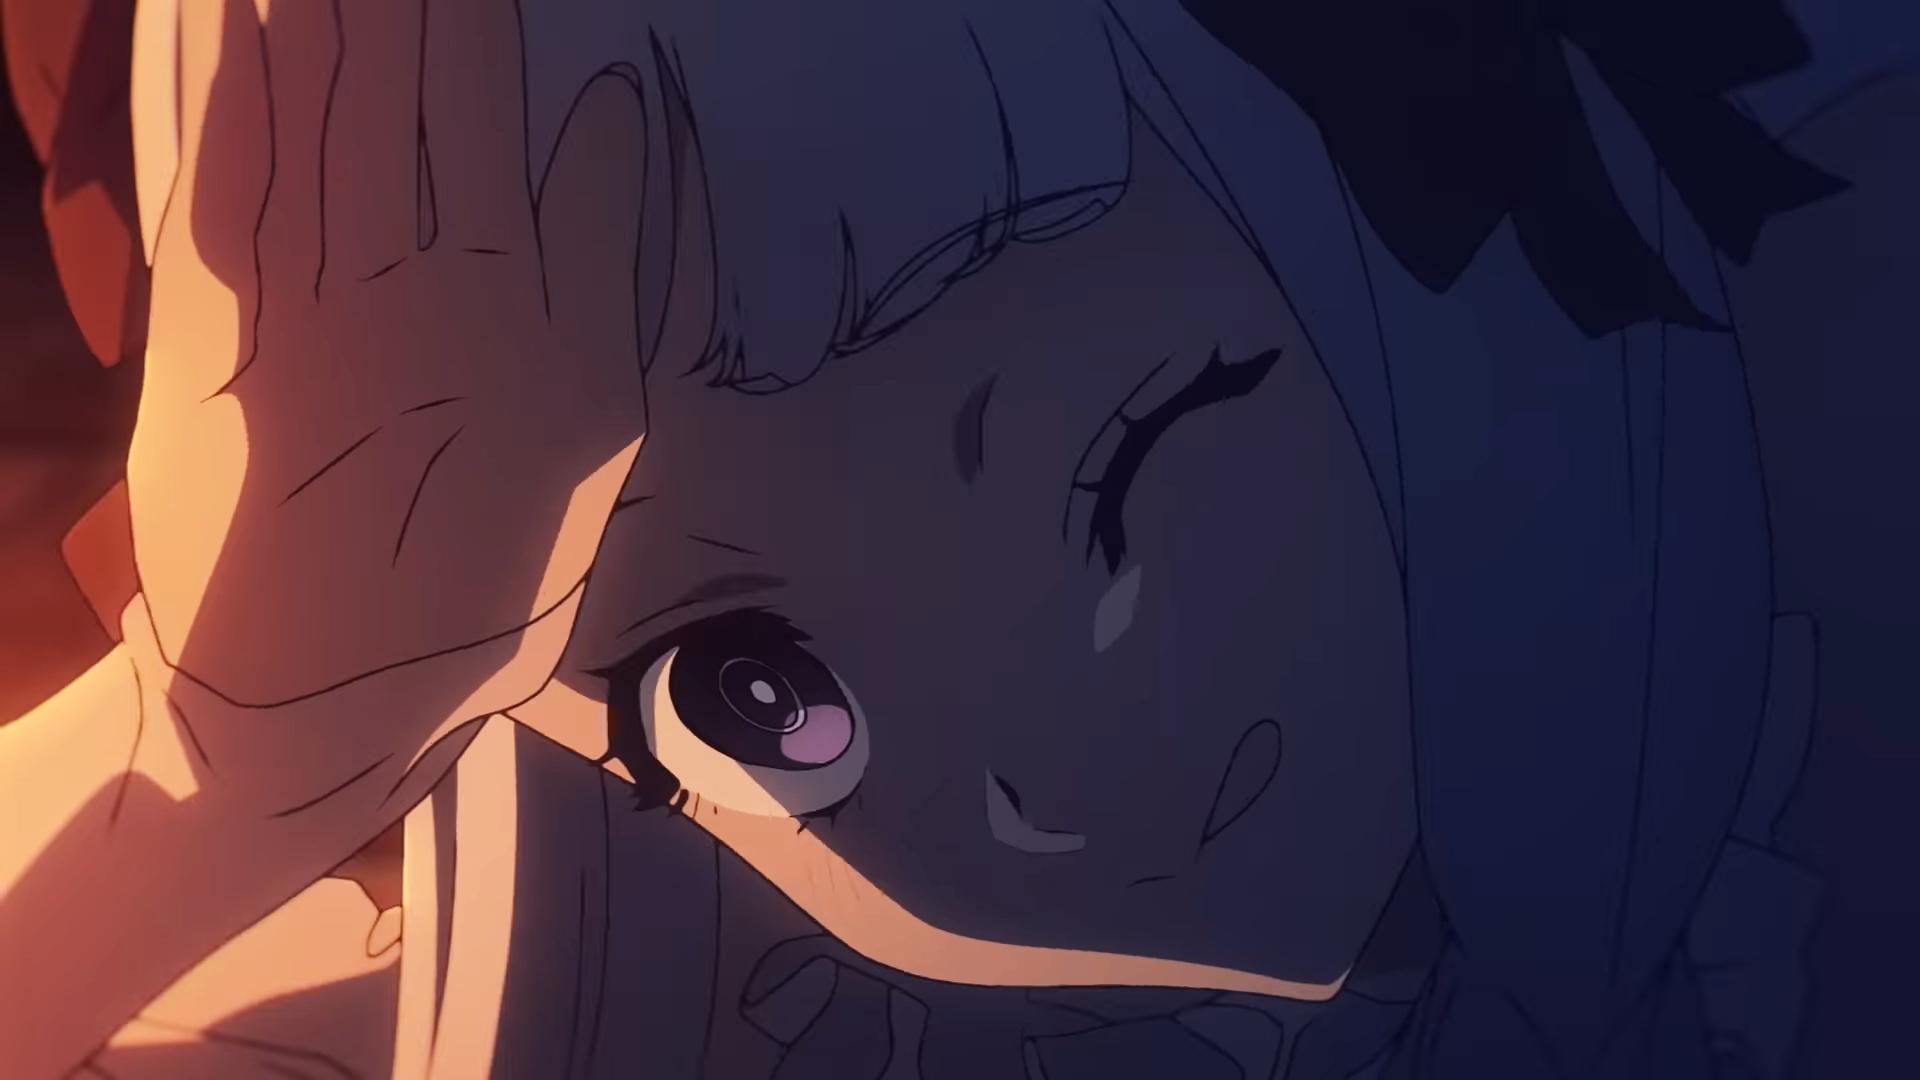 Fate/strange Fake: Whispers of Dawn - Assistir Animes Online HD